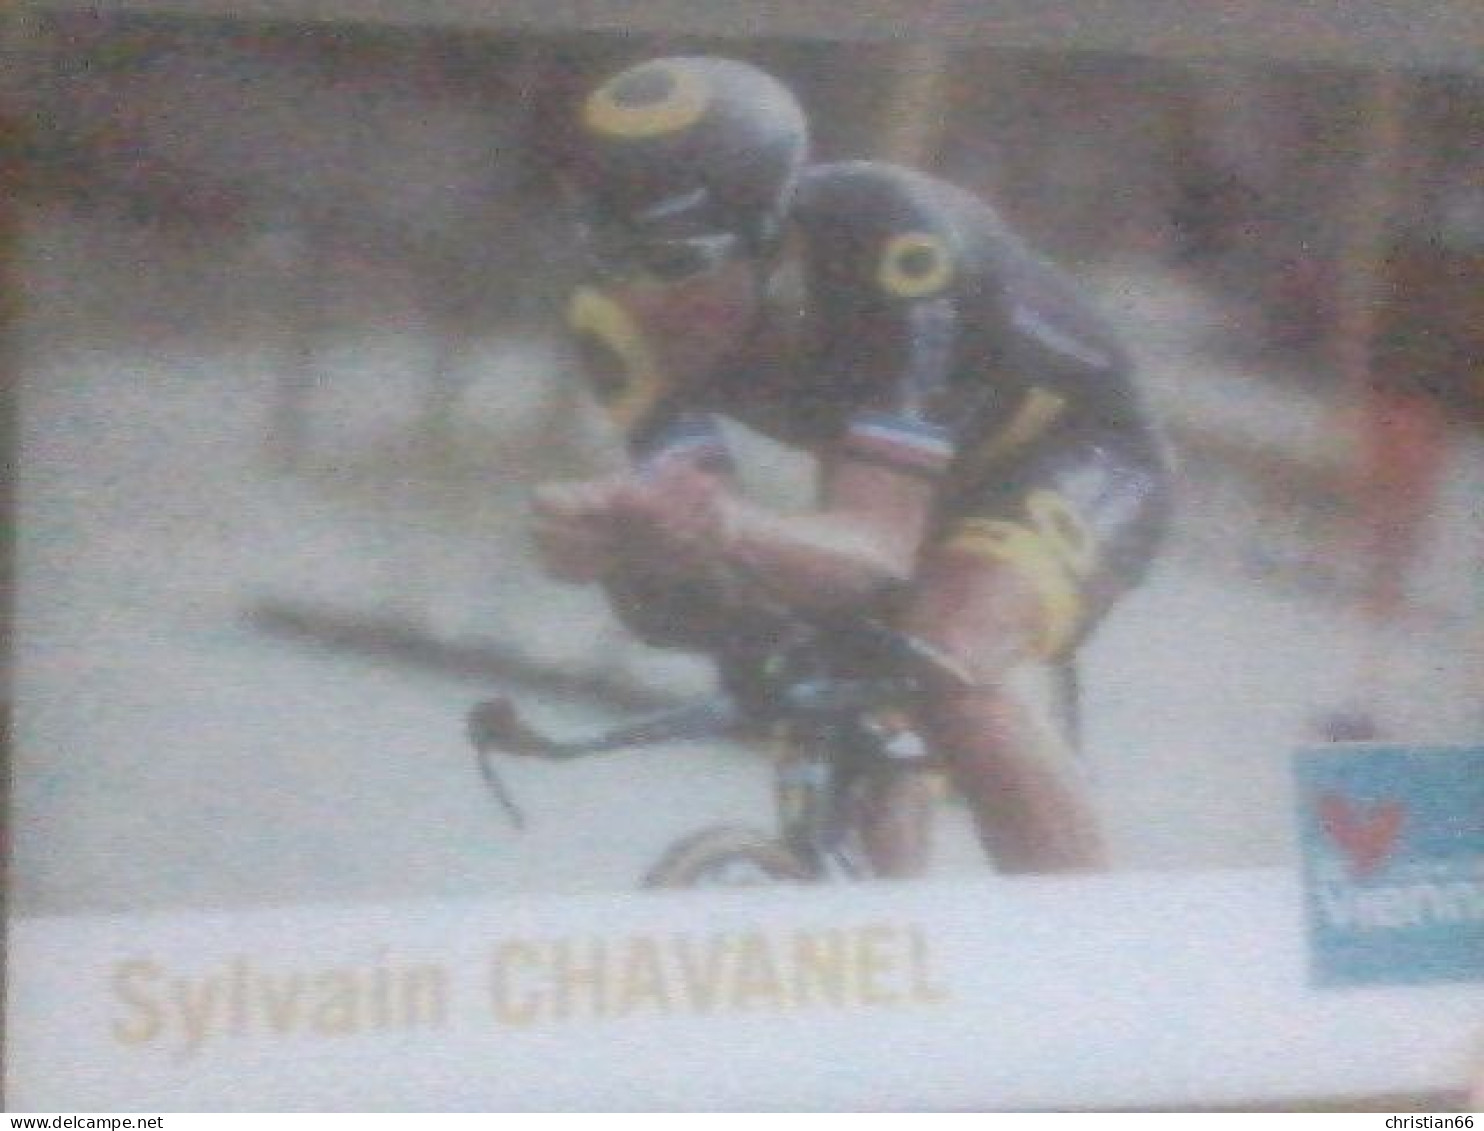 CYCLISME  : CARTE SYLVAIN CHAVANEL - Ciclismo